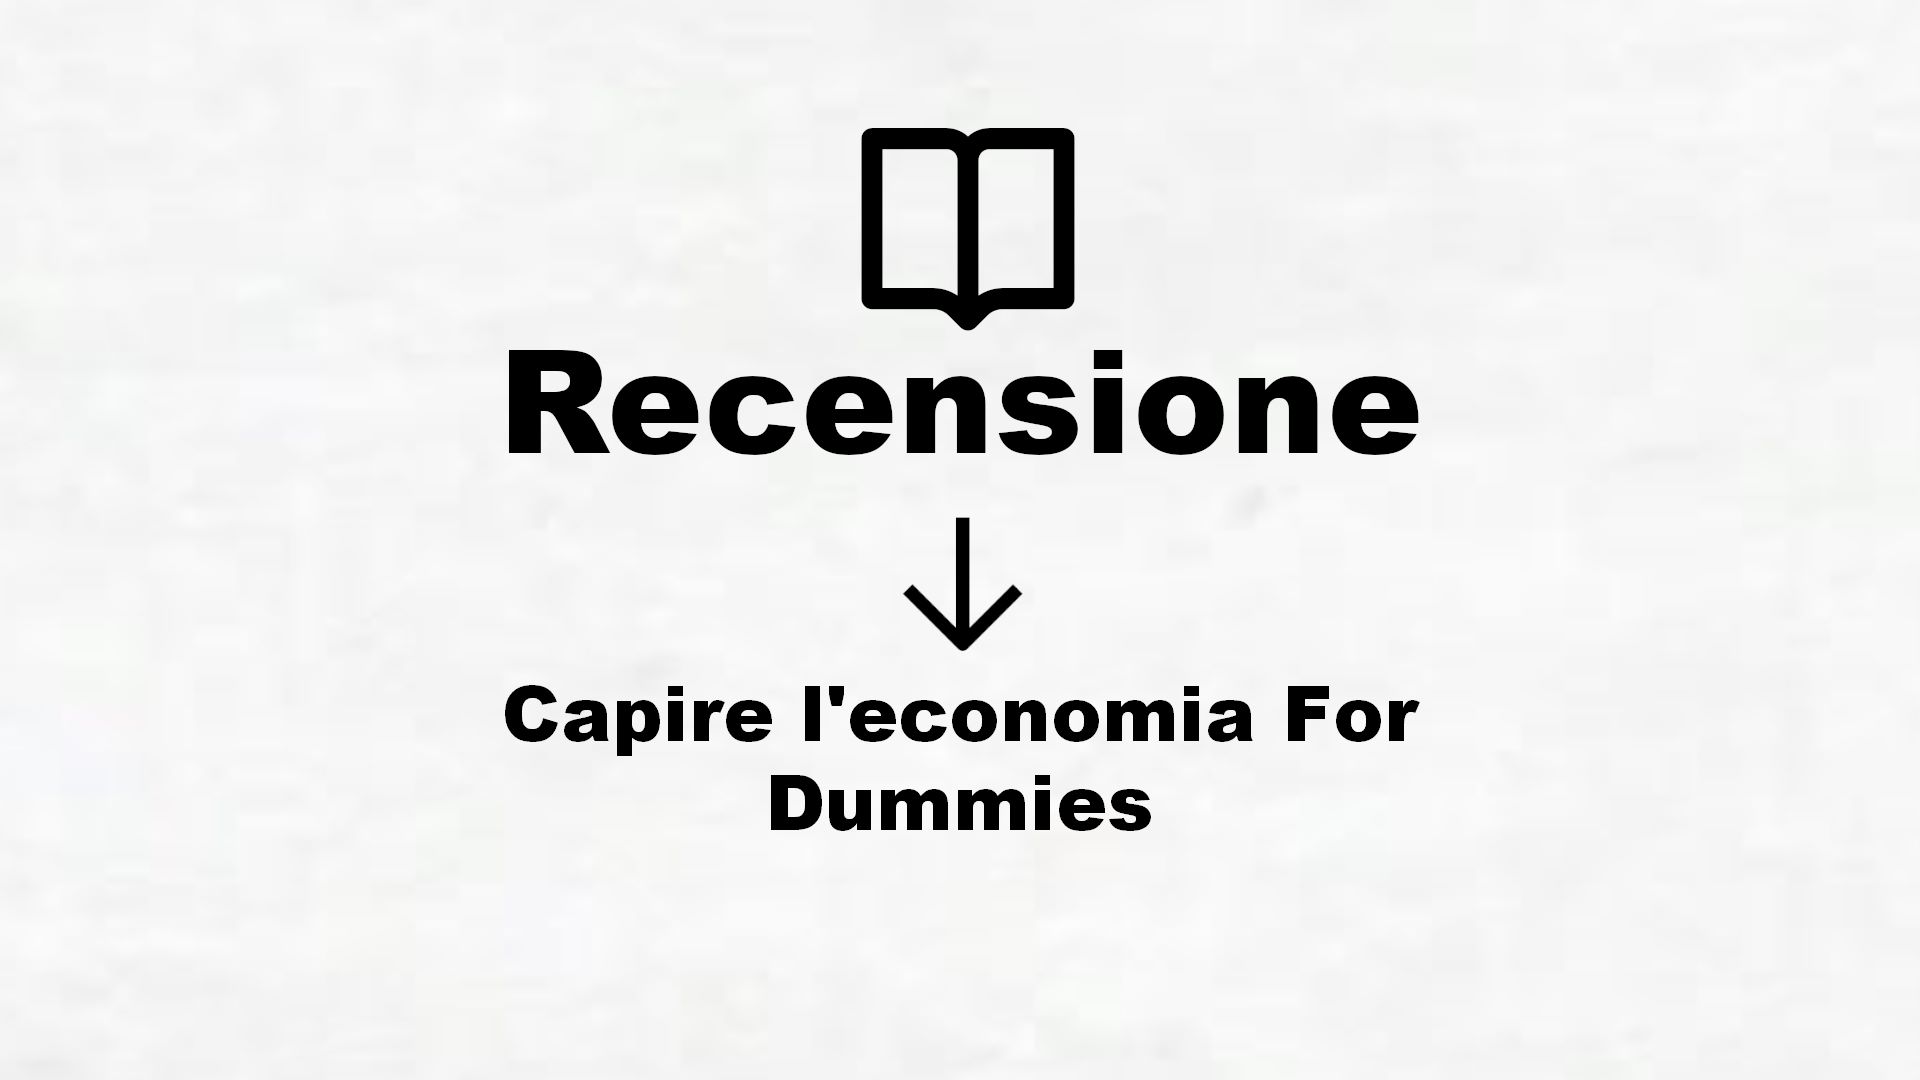 Capire l’economia For Dummies – Recensione Libro